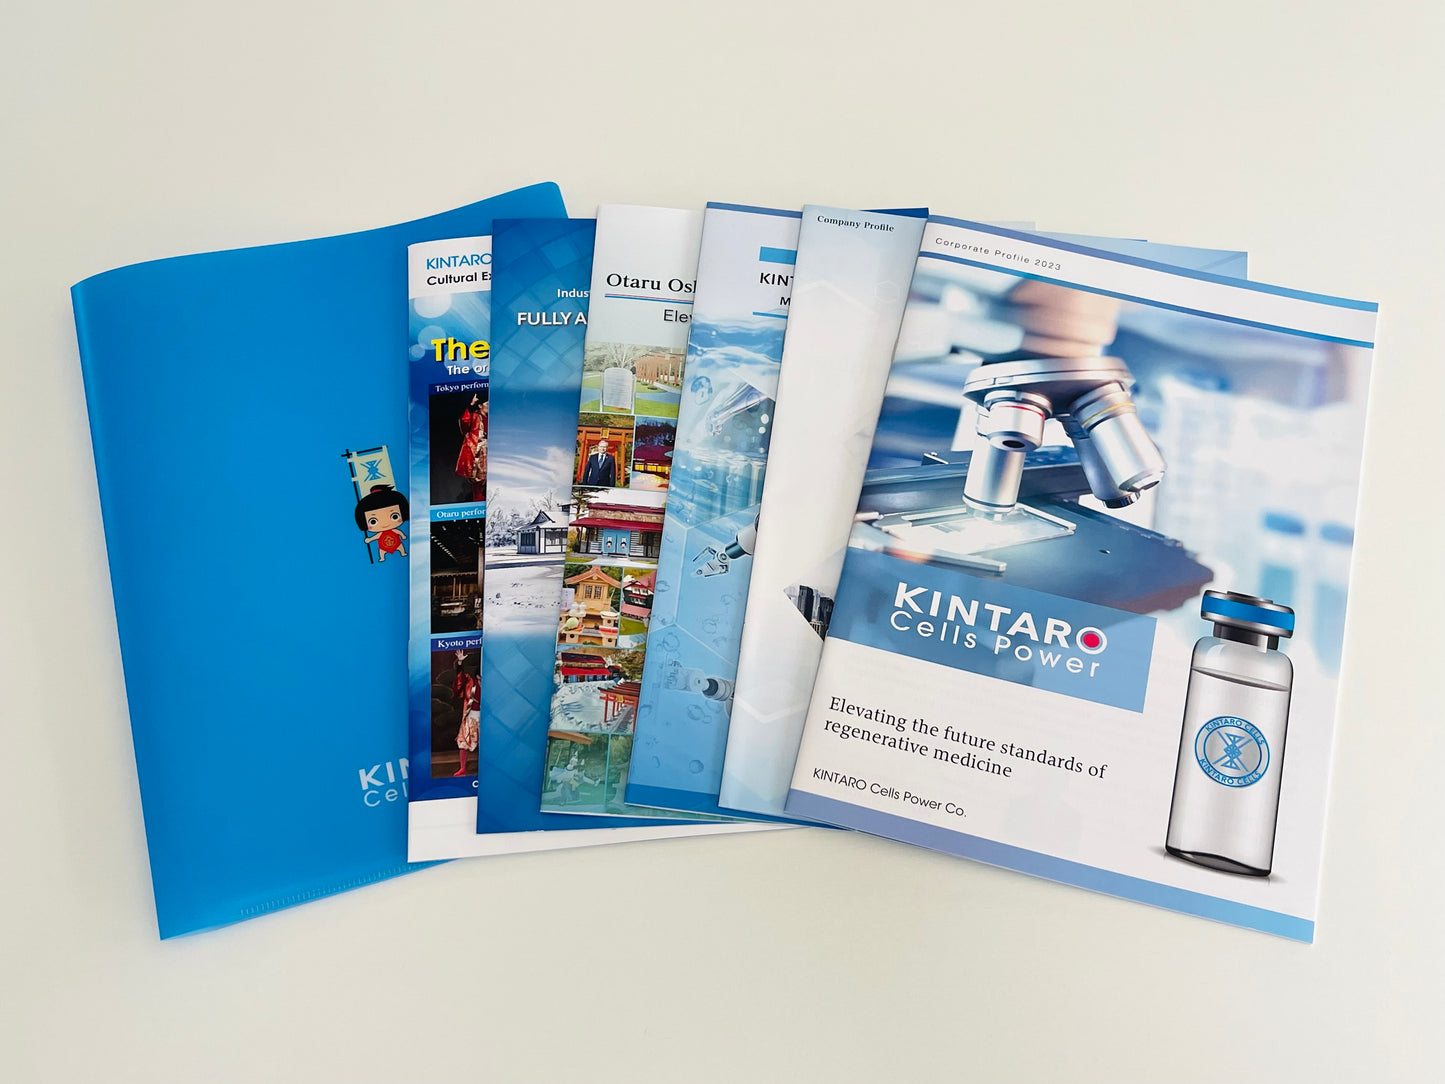 (HARDCOPY) Kintaro Cells Power Company Brochures & Pamplets Set